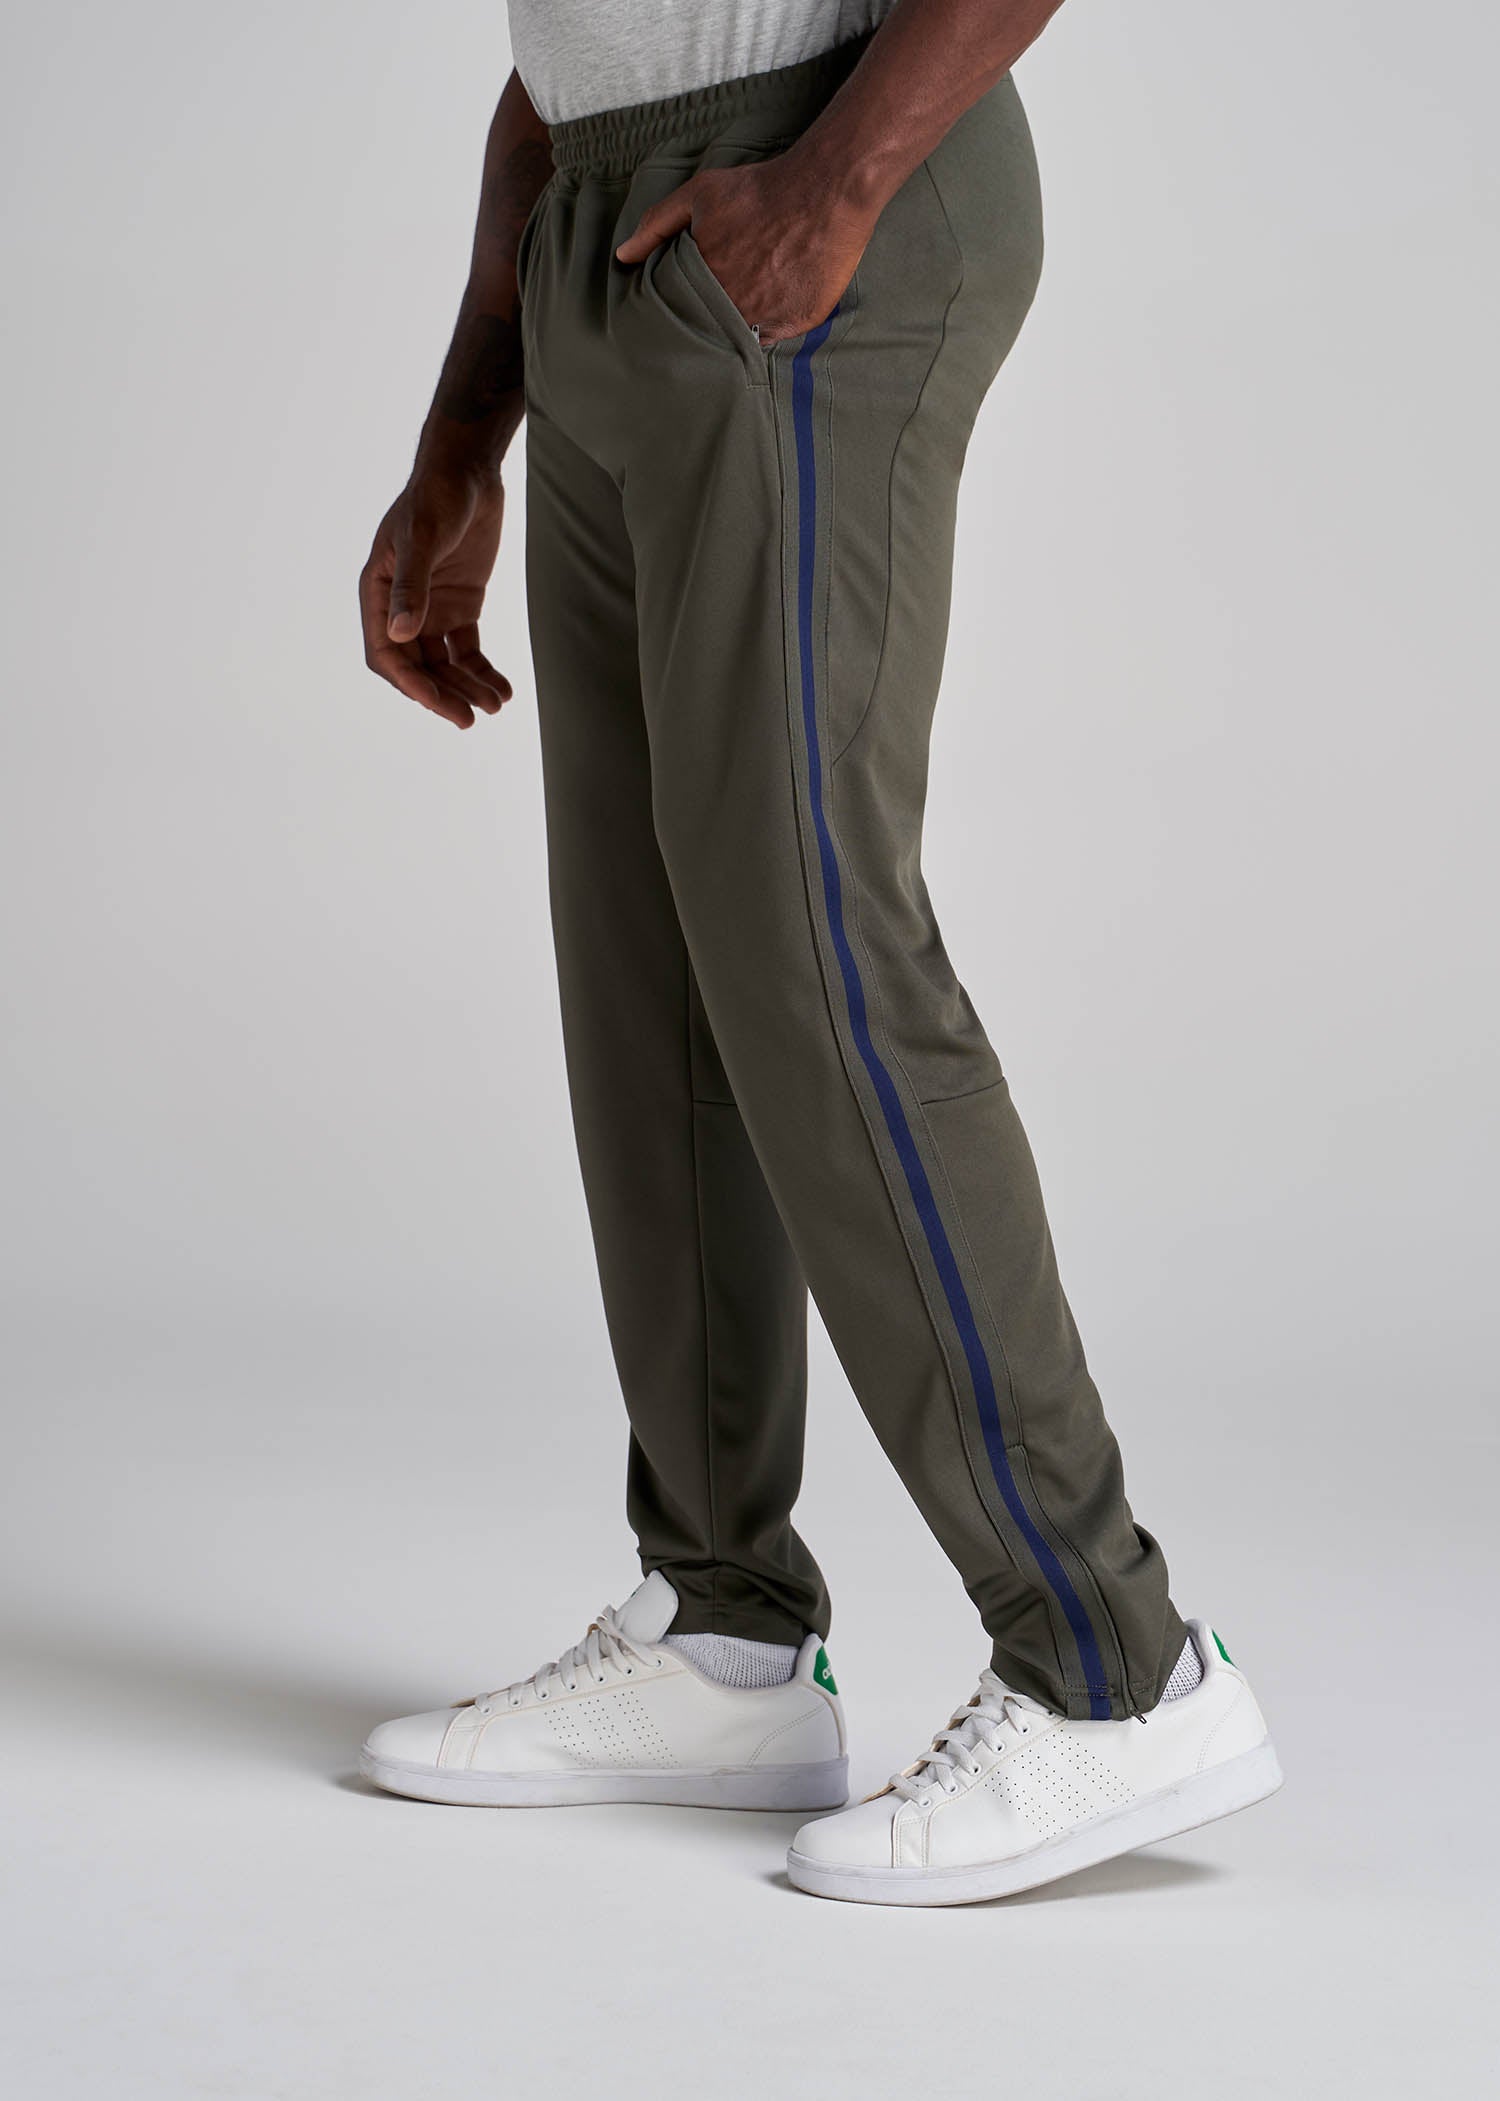 Athletic Stripe Pants for Tall Men in Green-Deep Blue Stripe